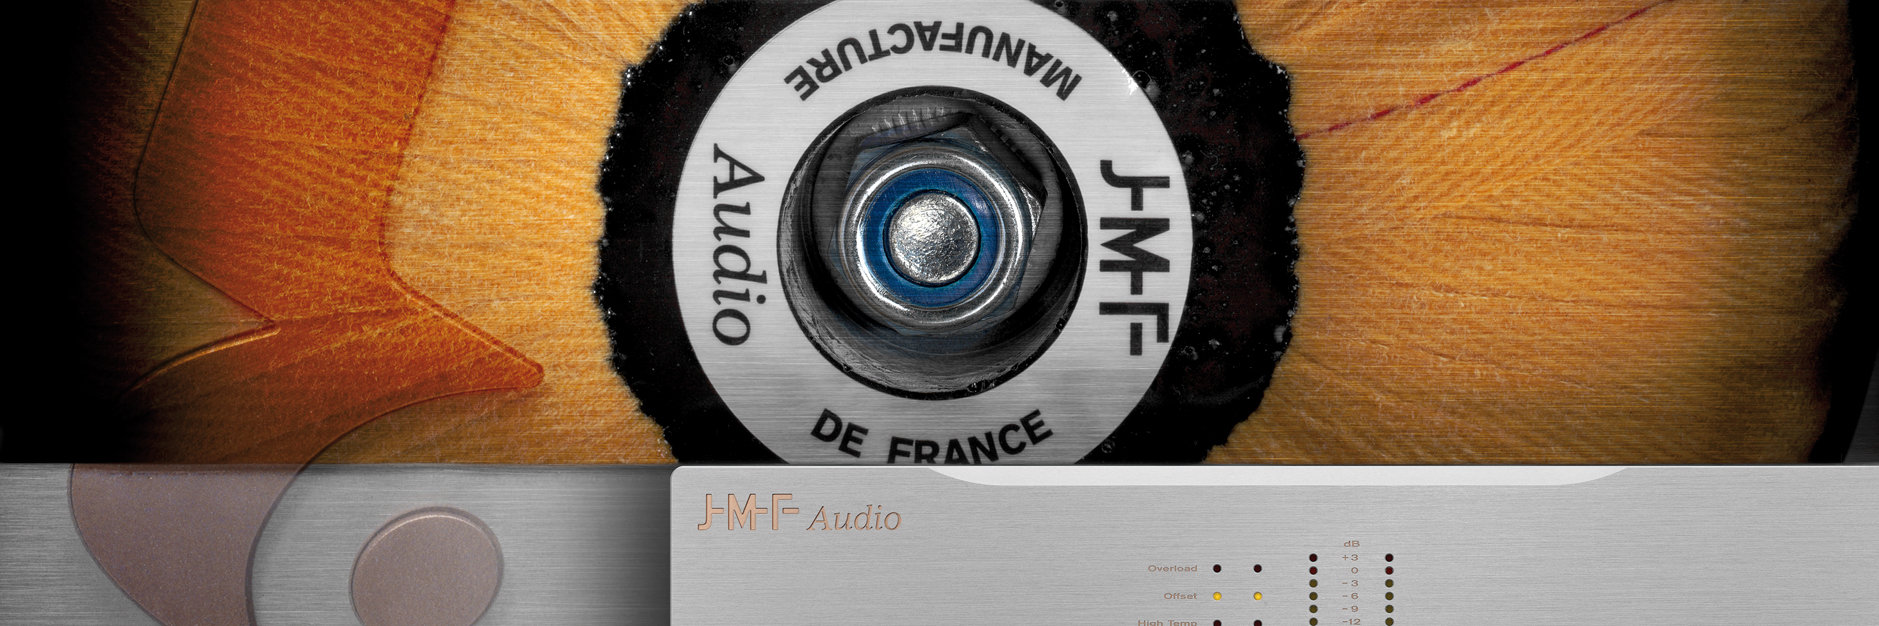 JMF Audio HQS 6002